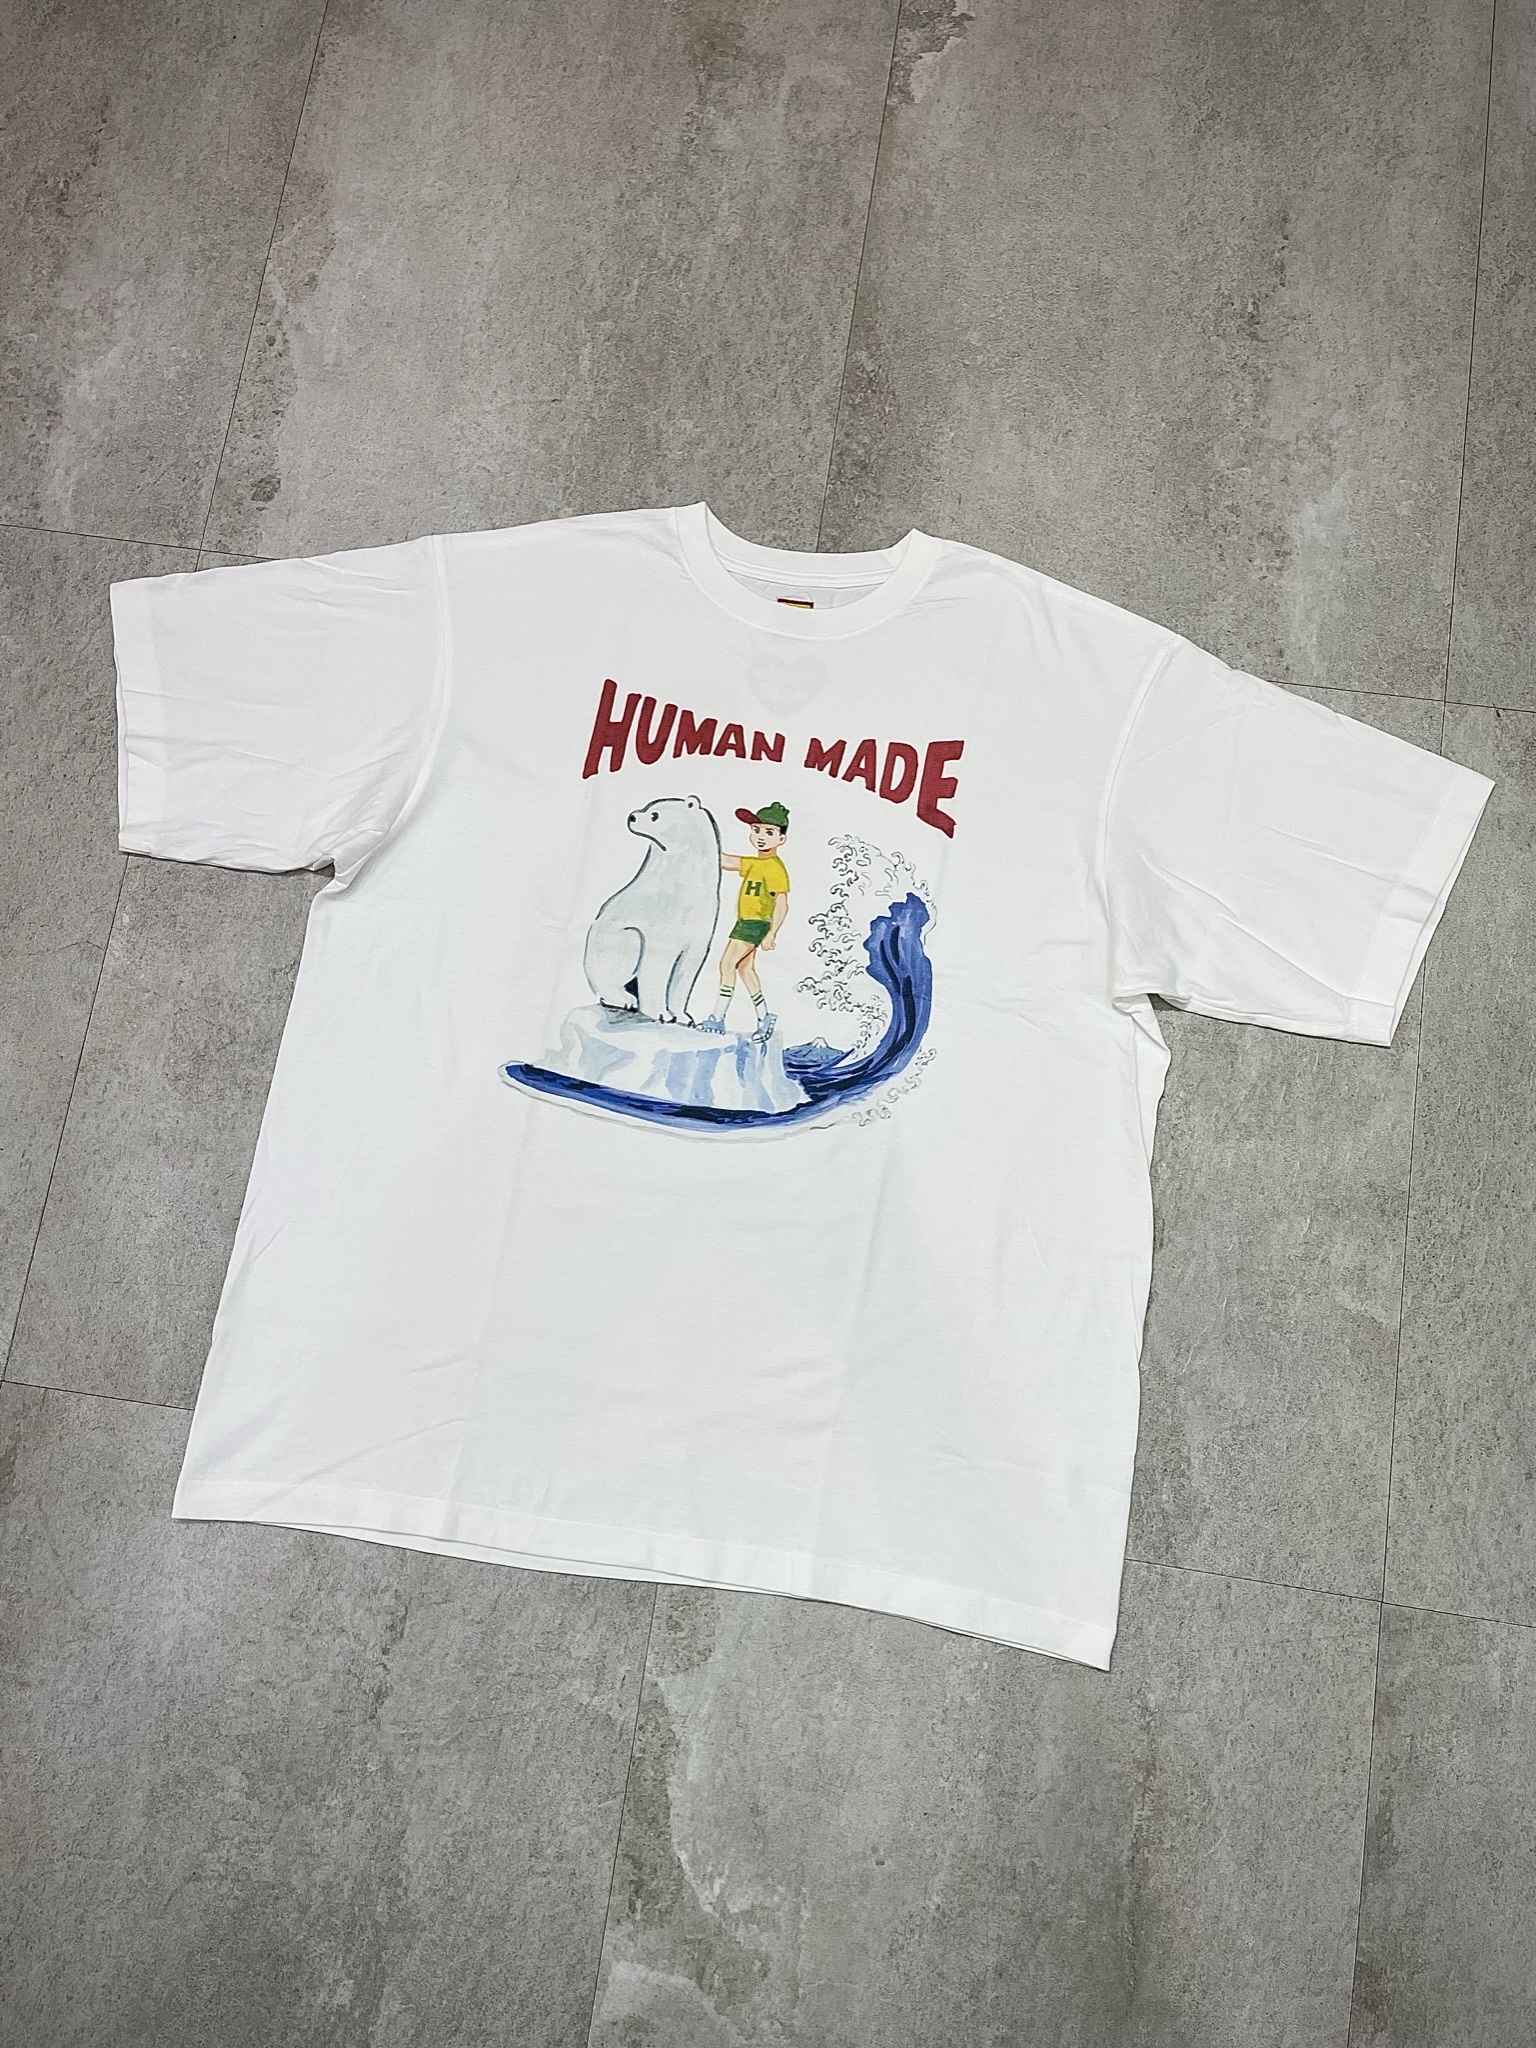 Human Made X Keiko Sootome T Shirt 1659